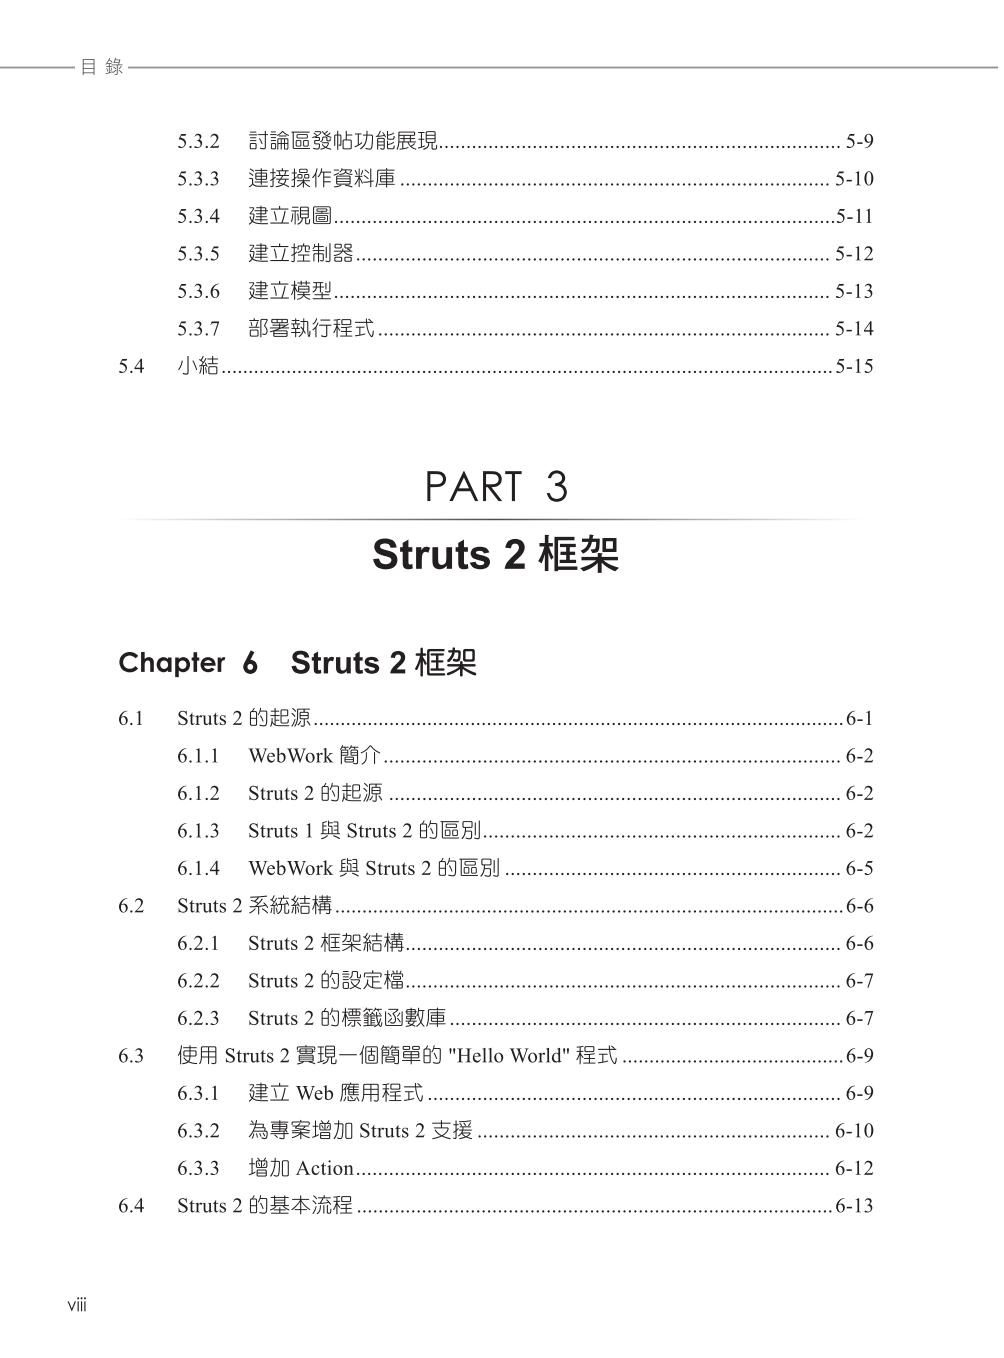 ►GO►最新優惠► 【書籍】王者歸來：Struts2+Spring+Hibernate框架技術與專案實戰應用(第2版)